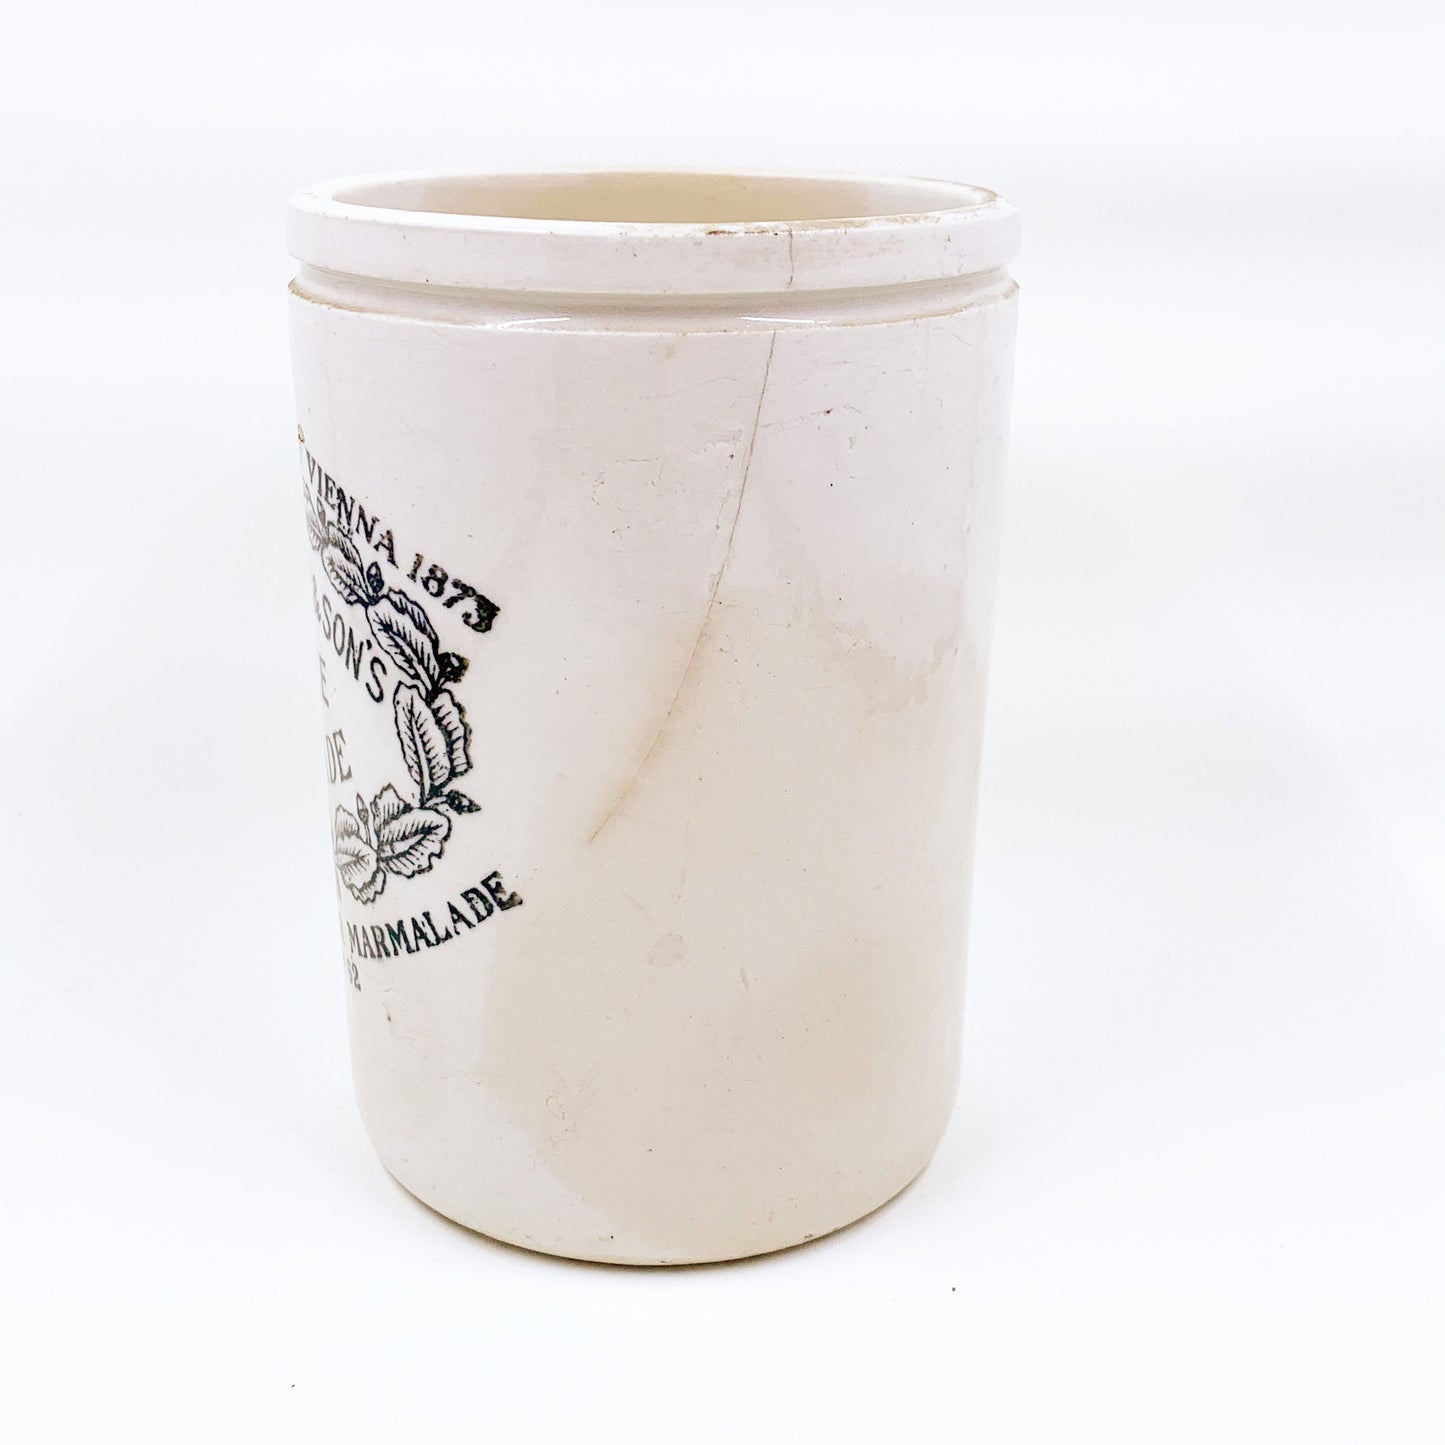 Antique James Keiller & Son Dundee Marmalade Jar | Made in England Crock Pot